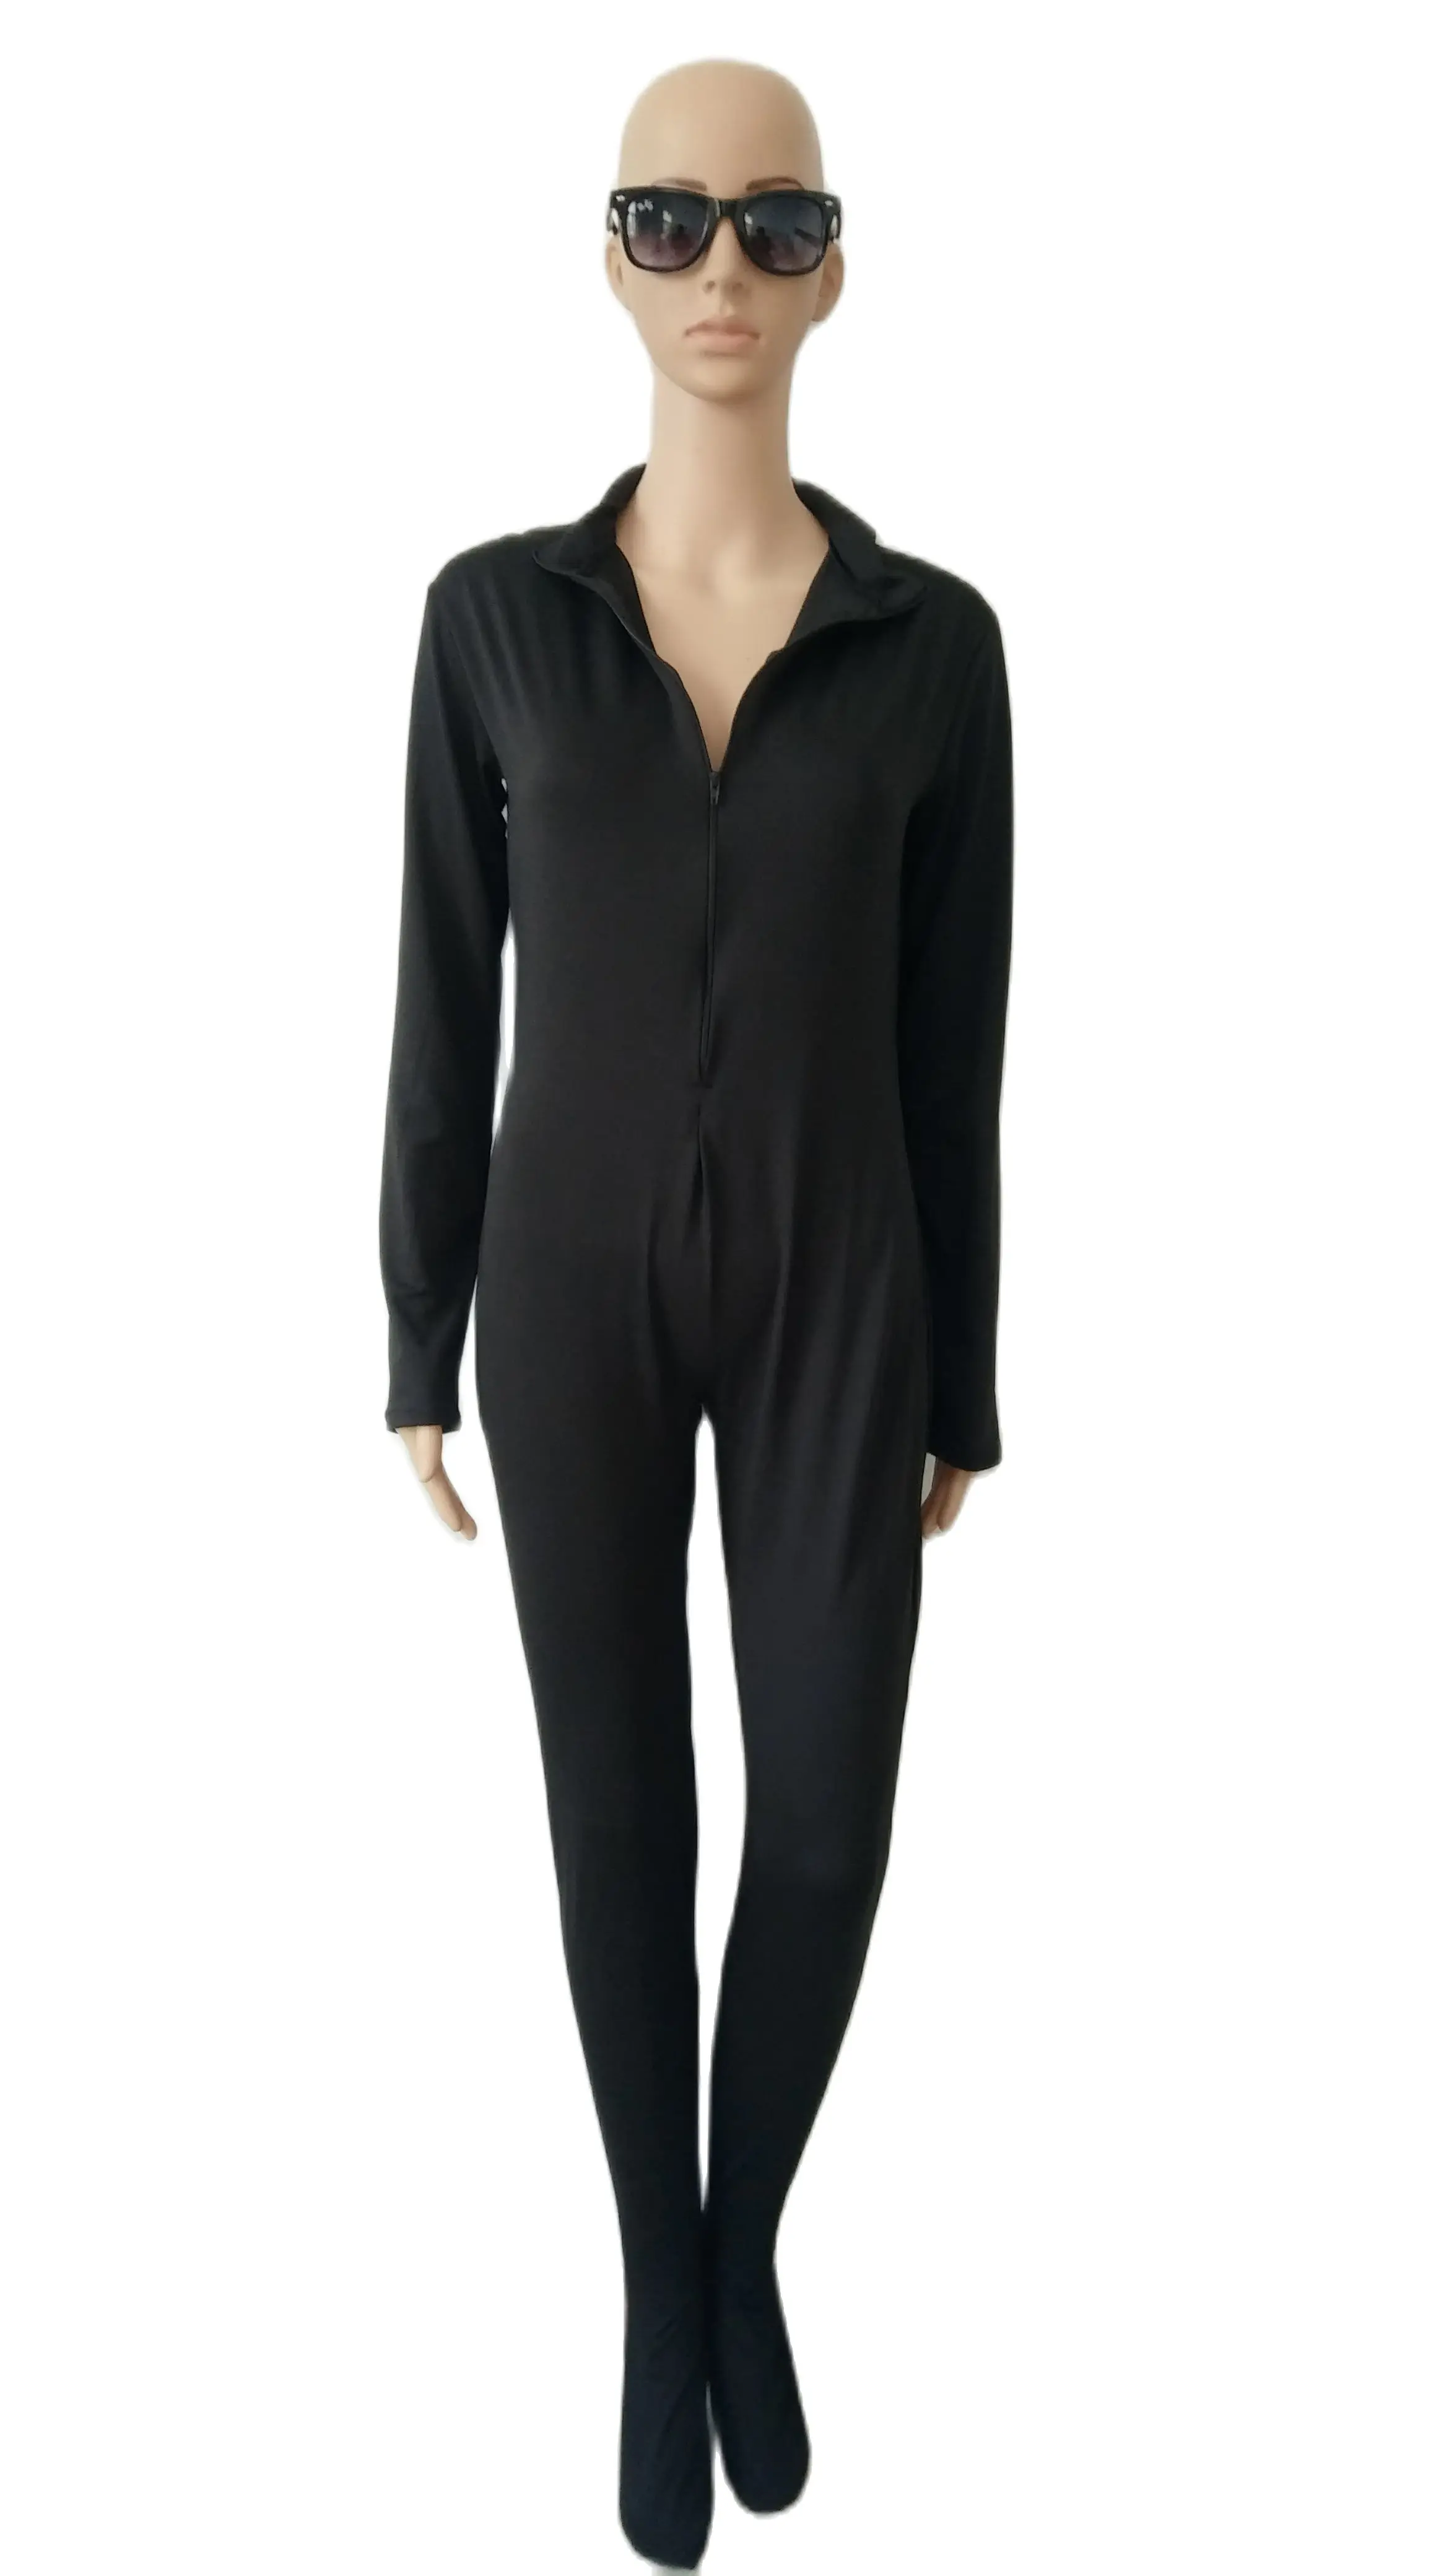 Scoop Neck Shiny Spandex Catsuit Long Sleeve Bodysuit Tight Hot